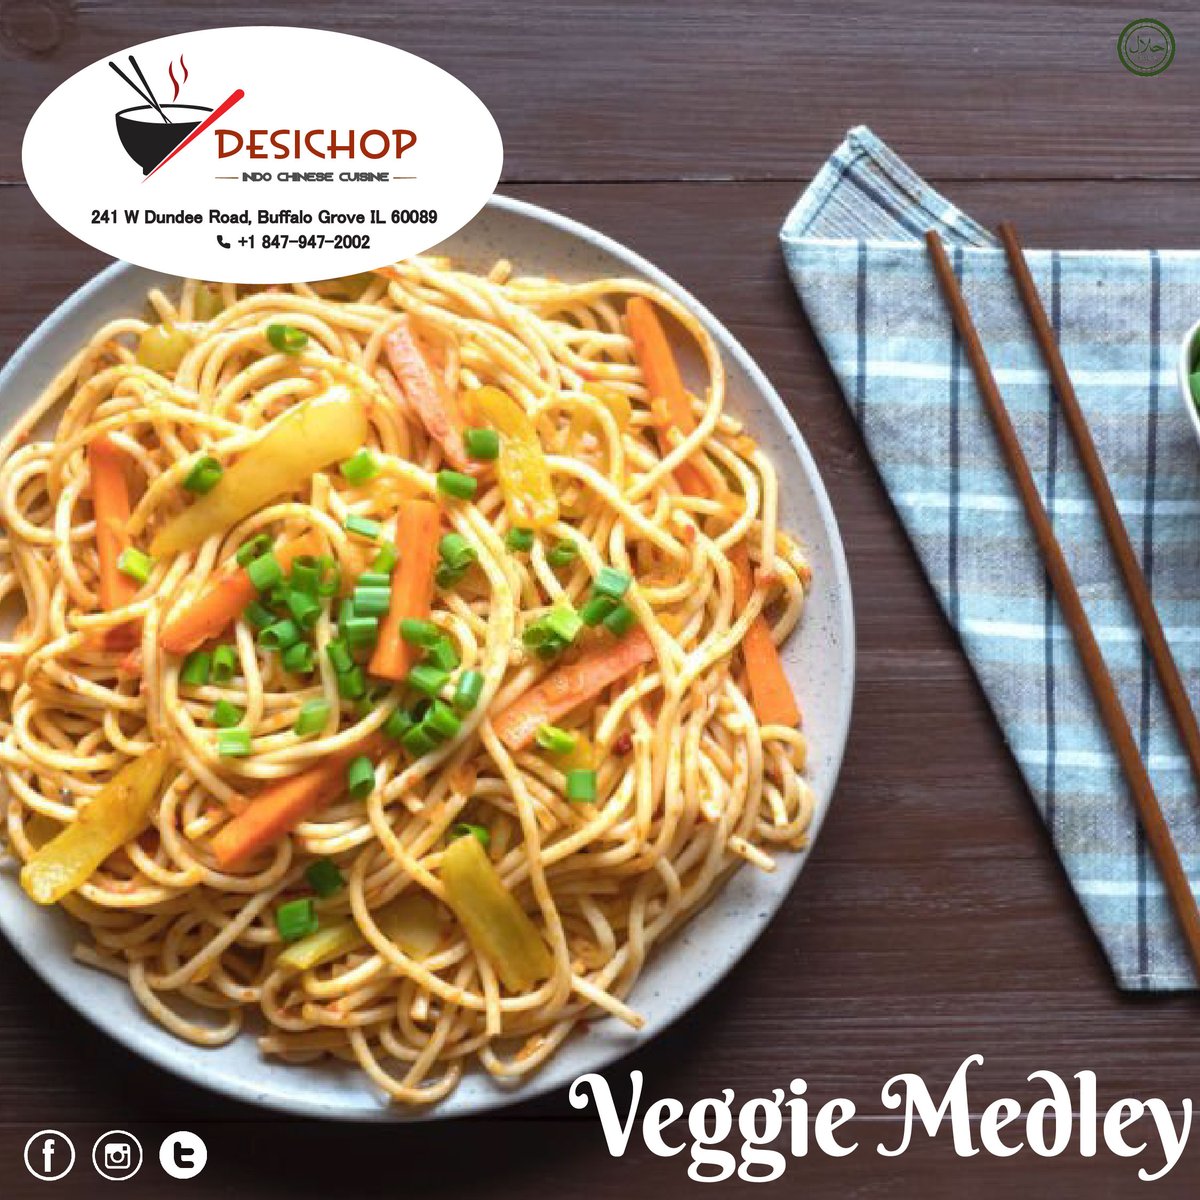 Veggielicious Combo
#VegHakkaNoodles
#NoodleLovers
#DeliciousDish
#FoodieFaves
#AsianCuisine
#TastyTreats
#VeggieDelight
#FlavorfulNoodles
#FoodCravings
#Foodgasm